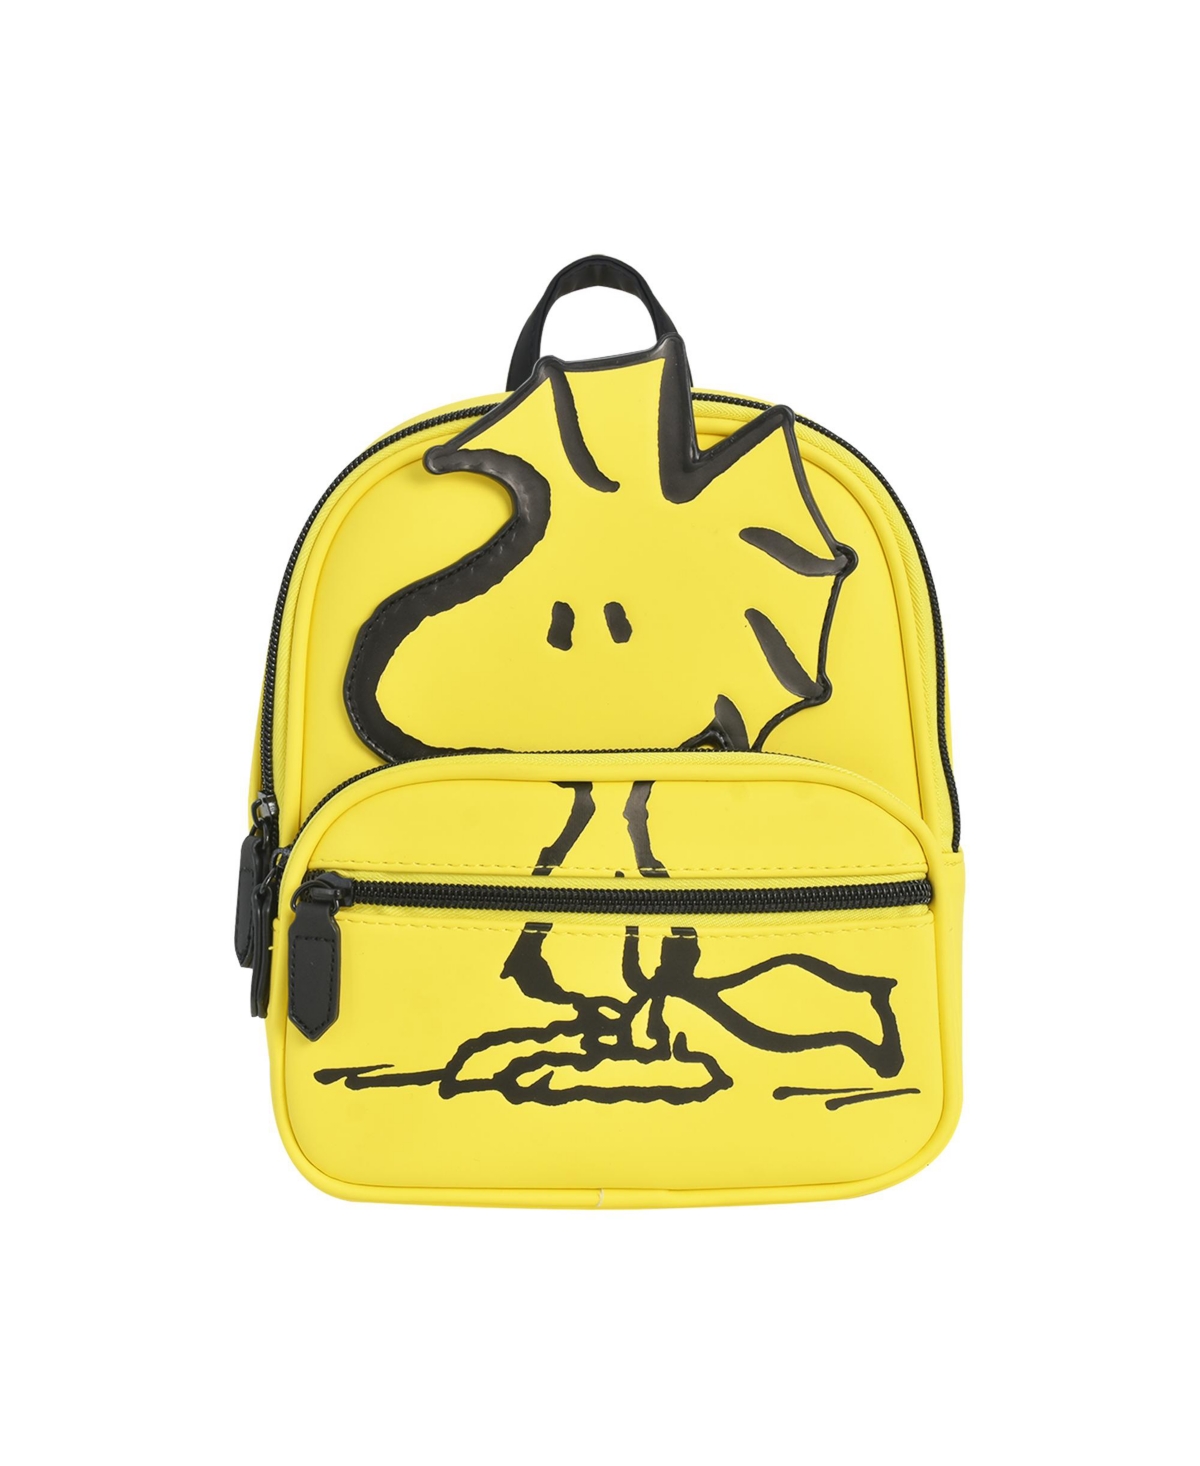 Woodstock Full Pose Applique Mini Backpack - Yellow